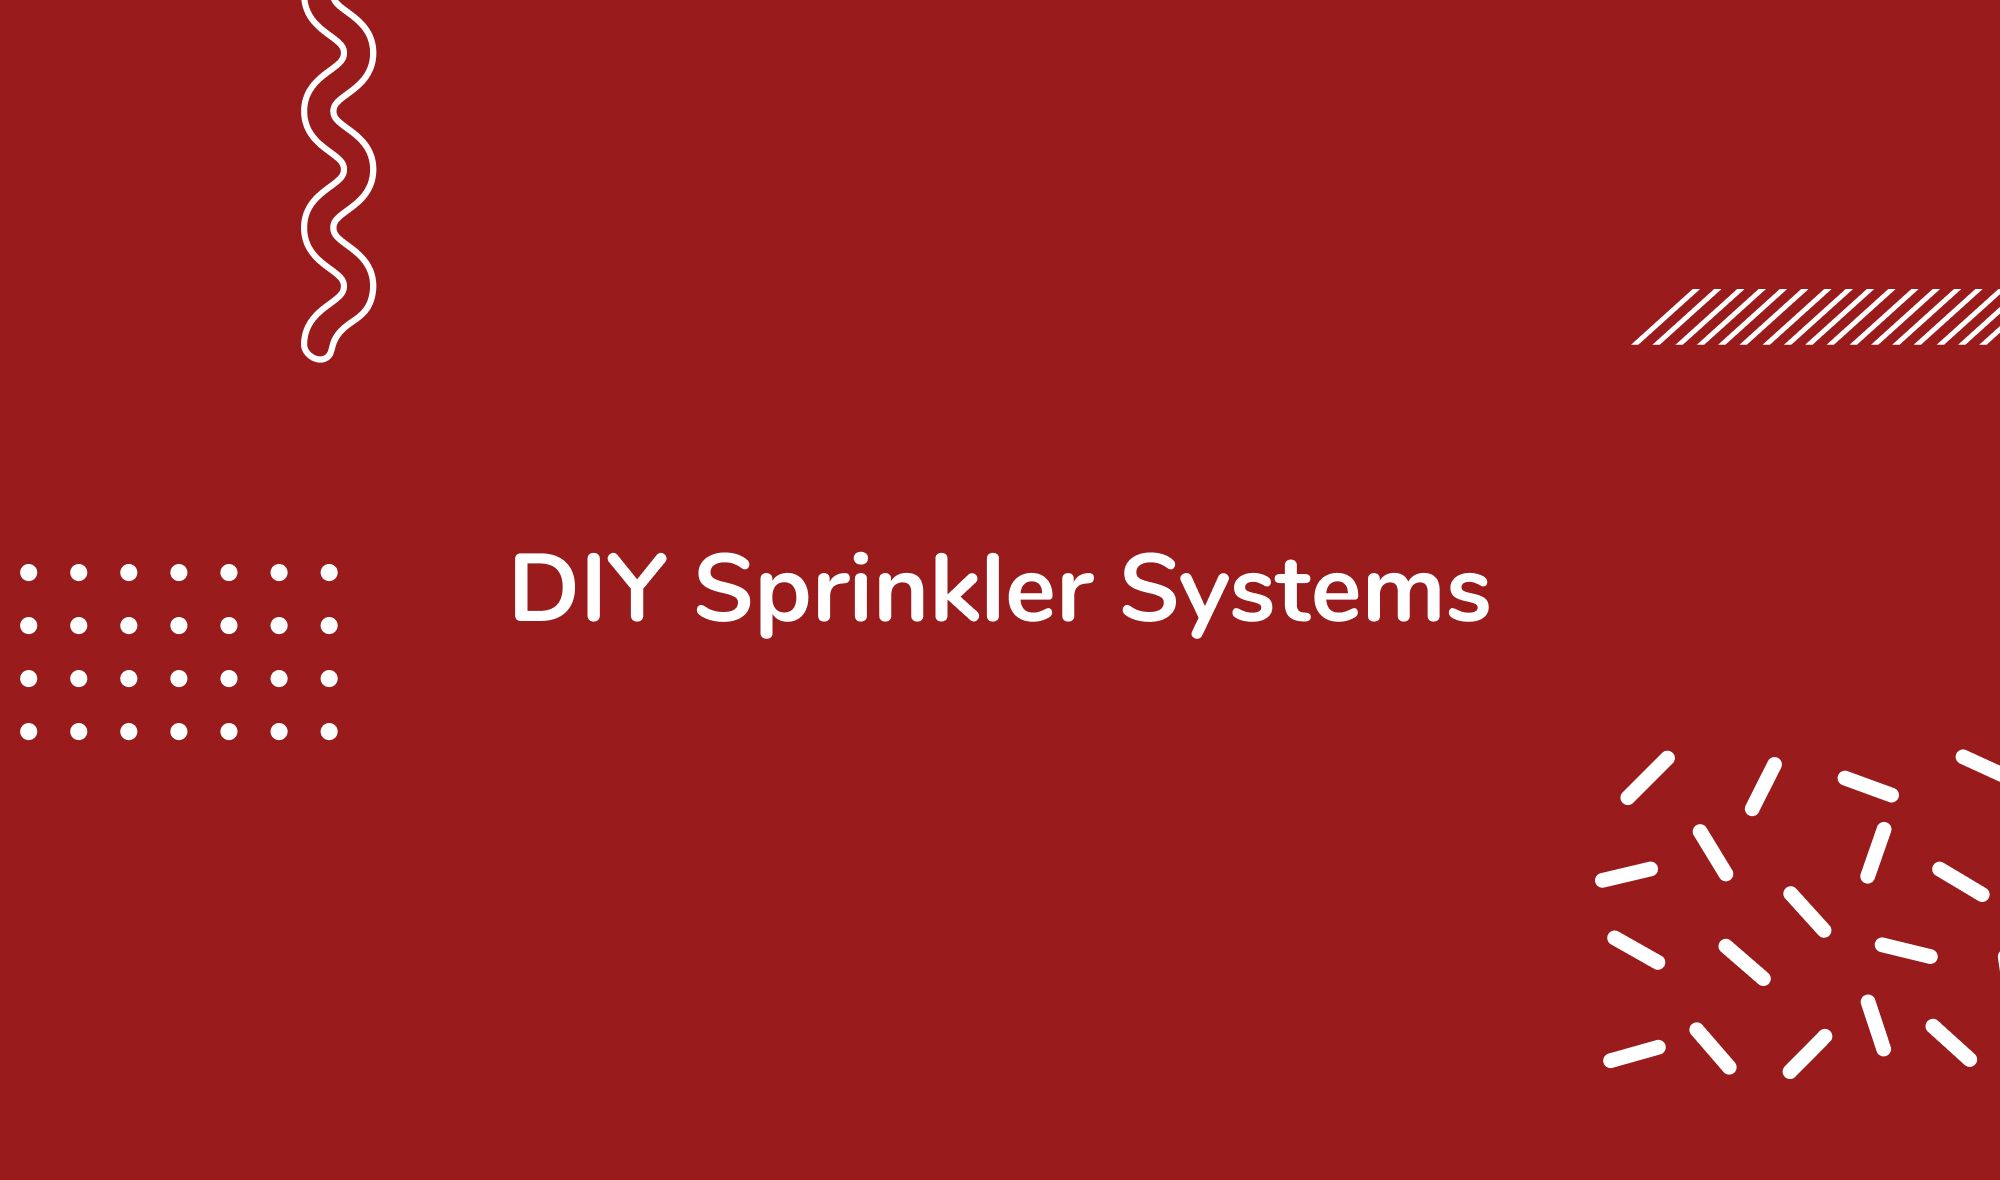 DIY Sprinkler Systems: Why Choose DIY?